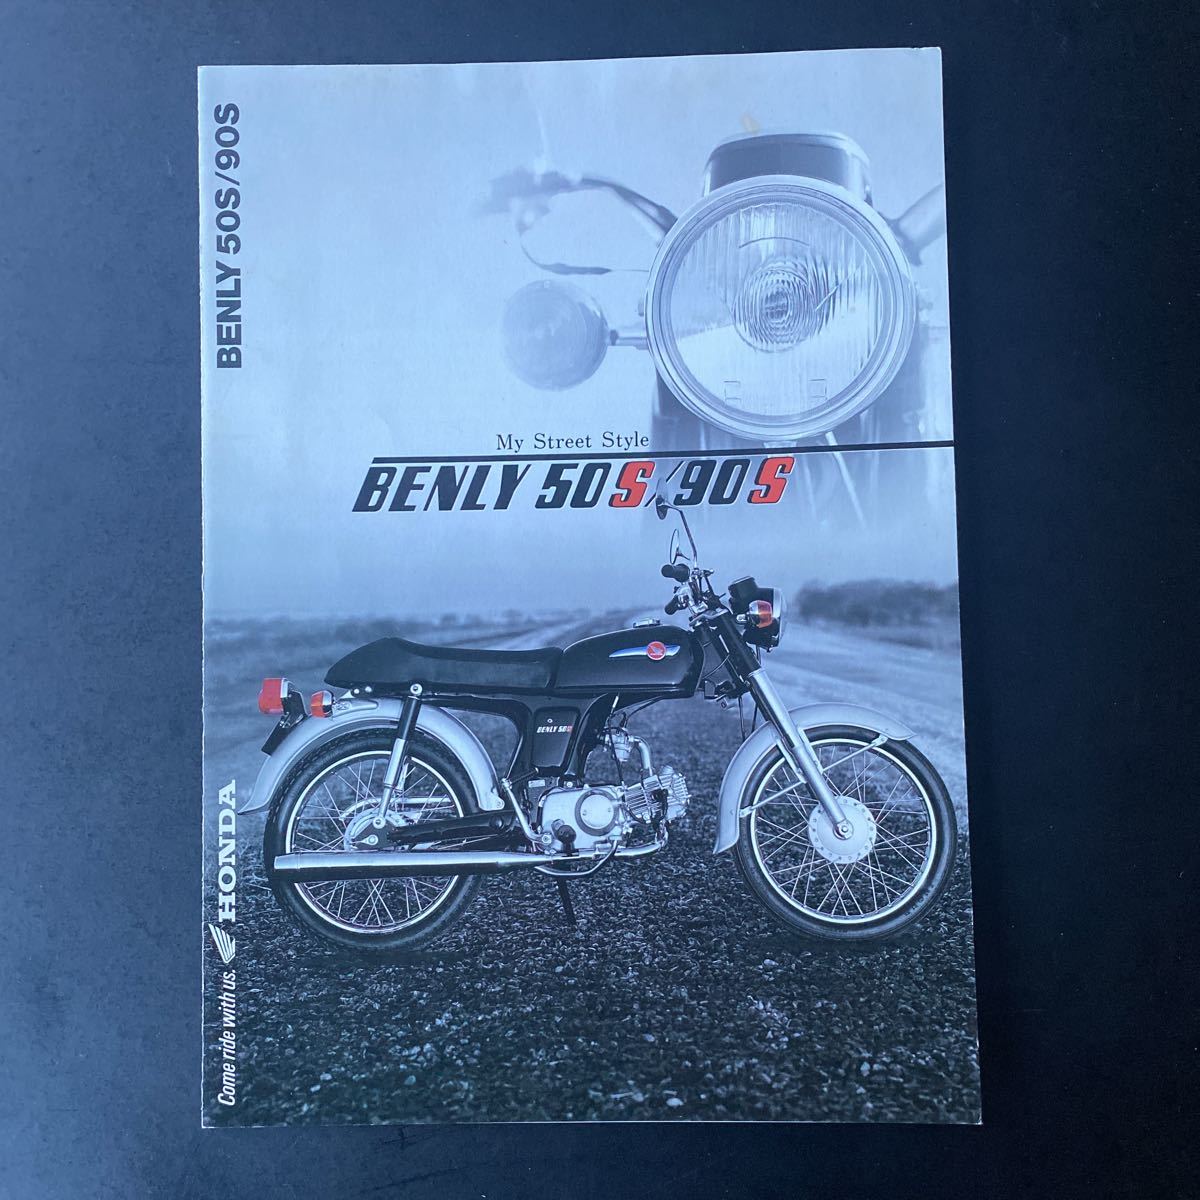 HONDA BENLY 50S    BLUESILVER  9452 km  details  Japanese used  Motorcycles  GooBike English